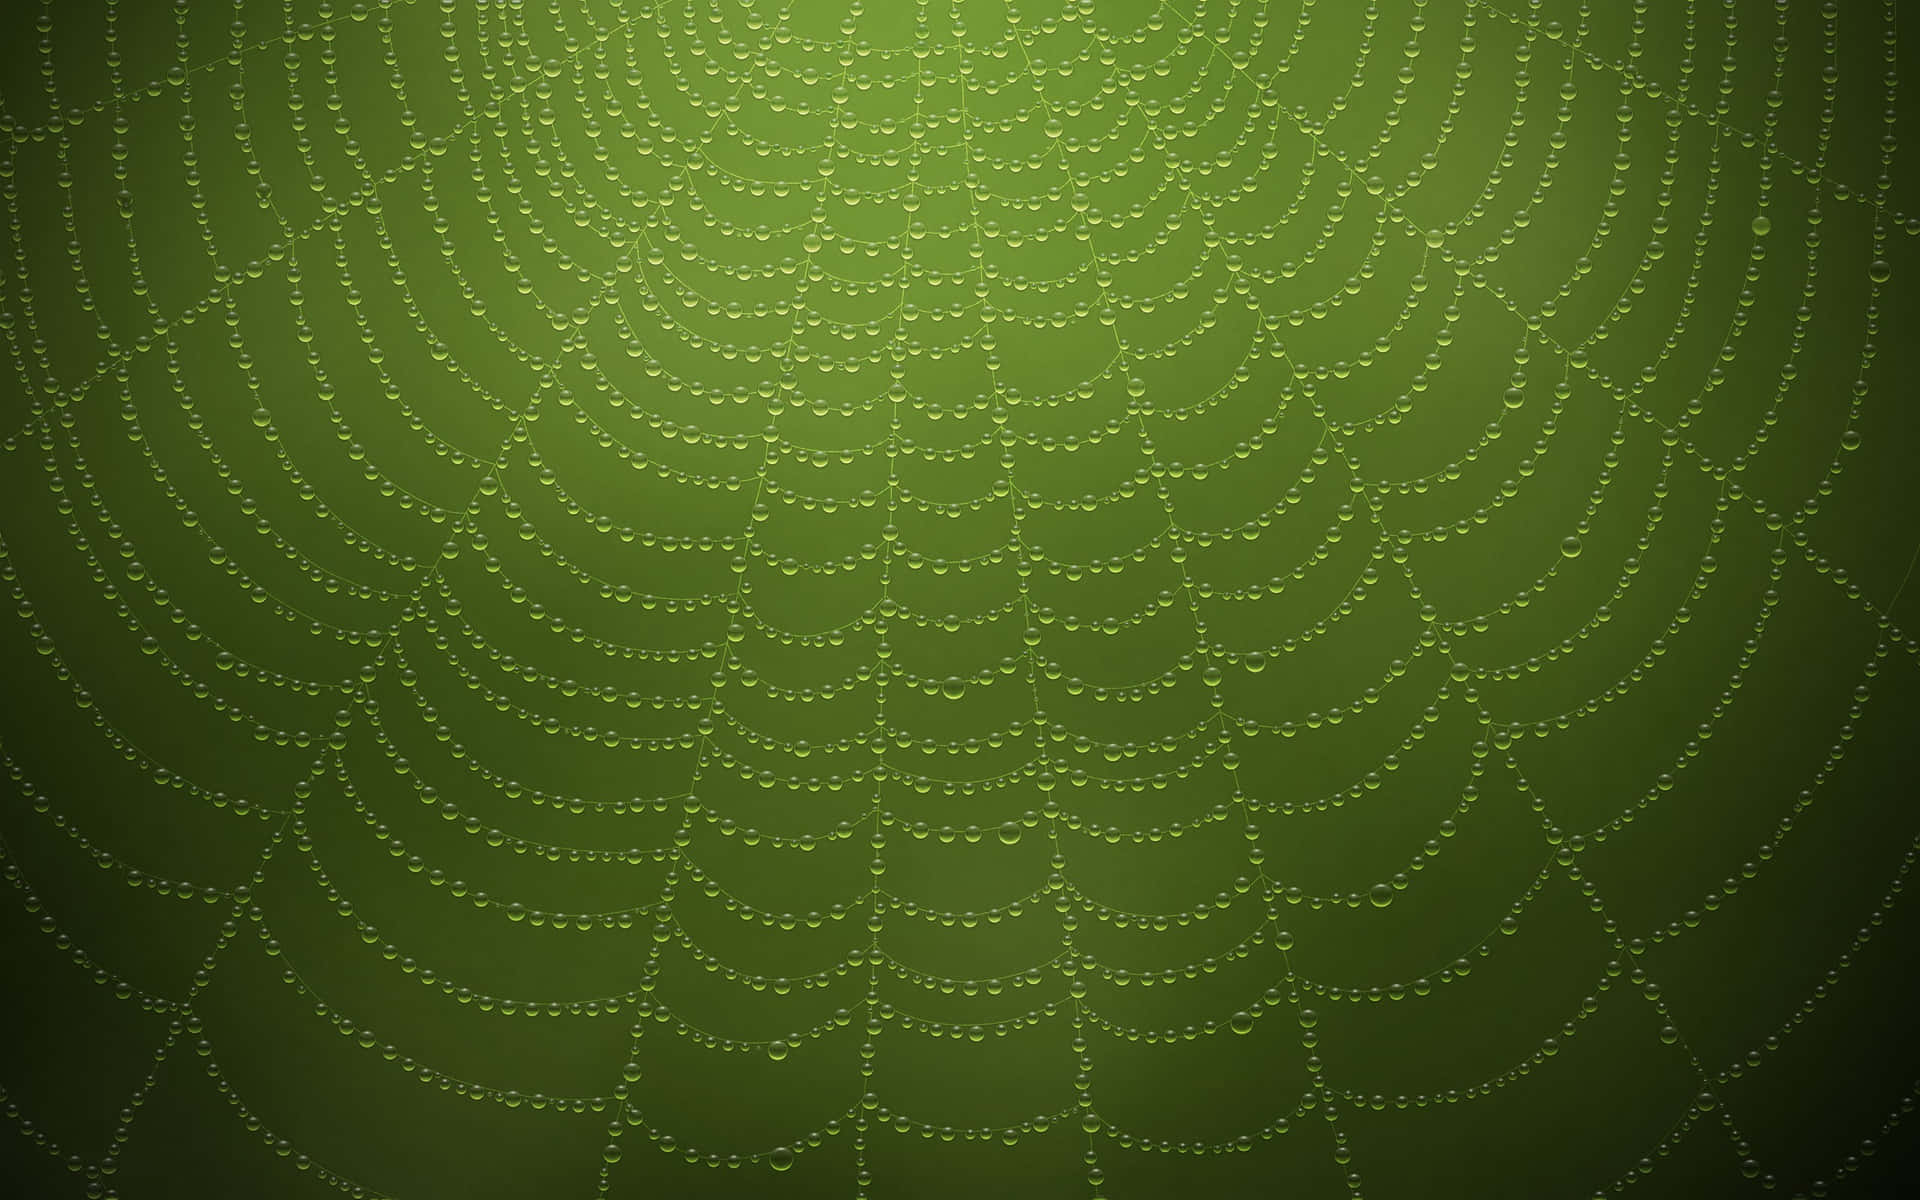 Dewy Spider Web Green Background Wallpaper